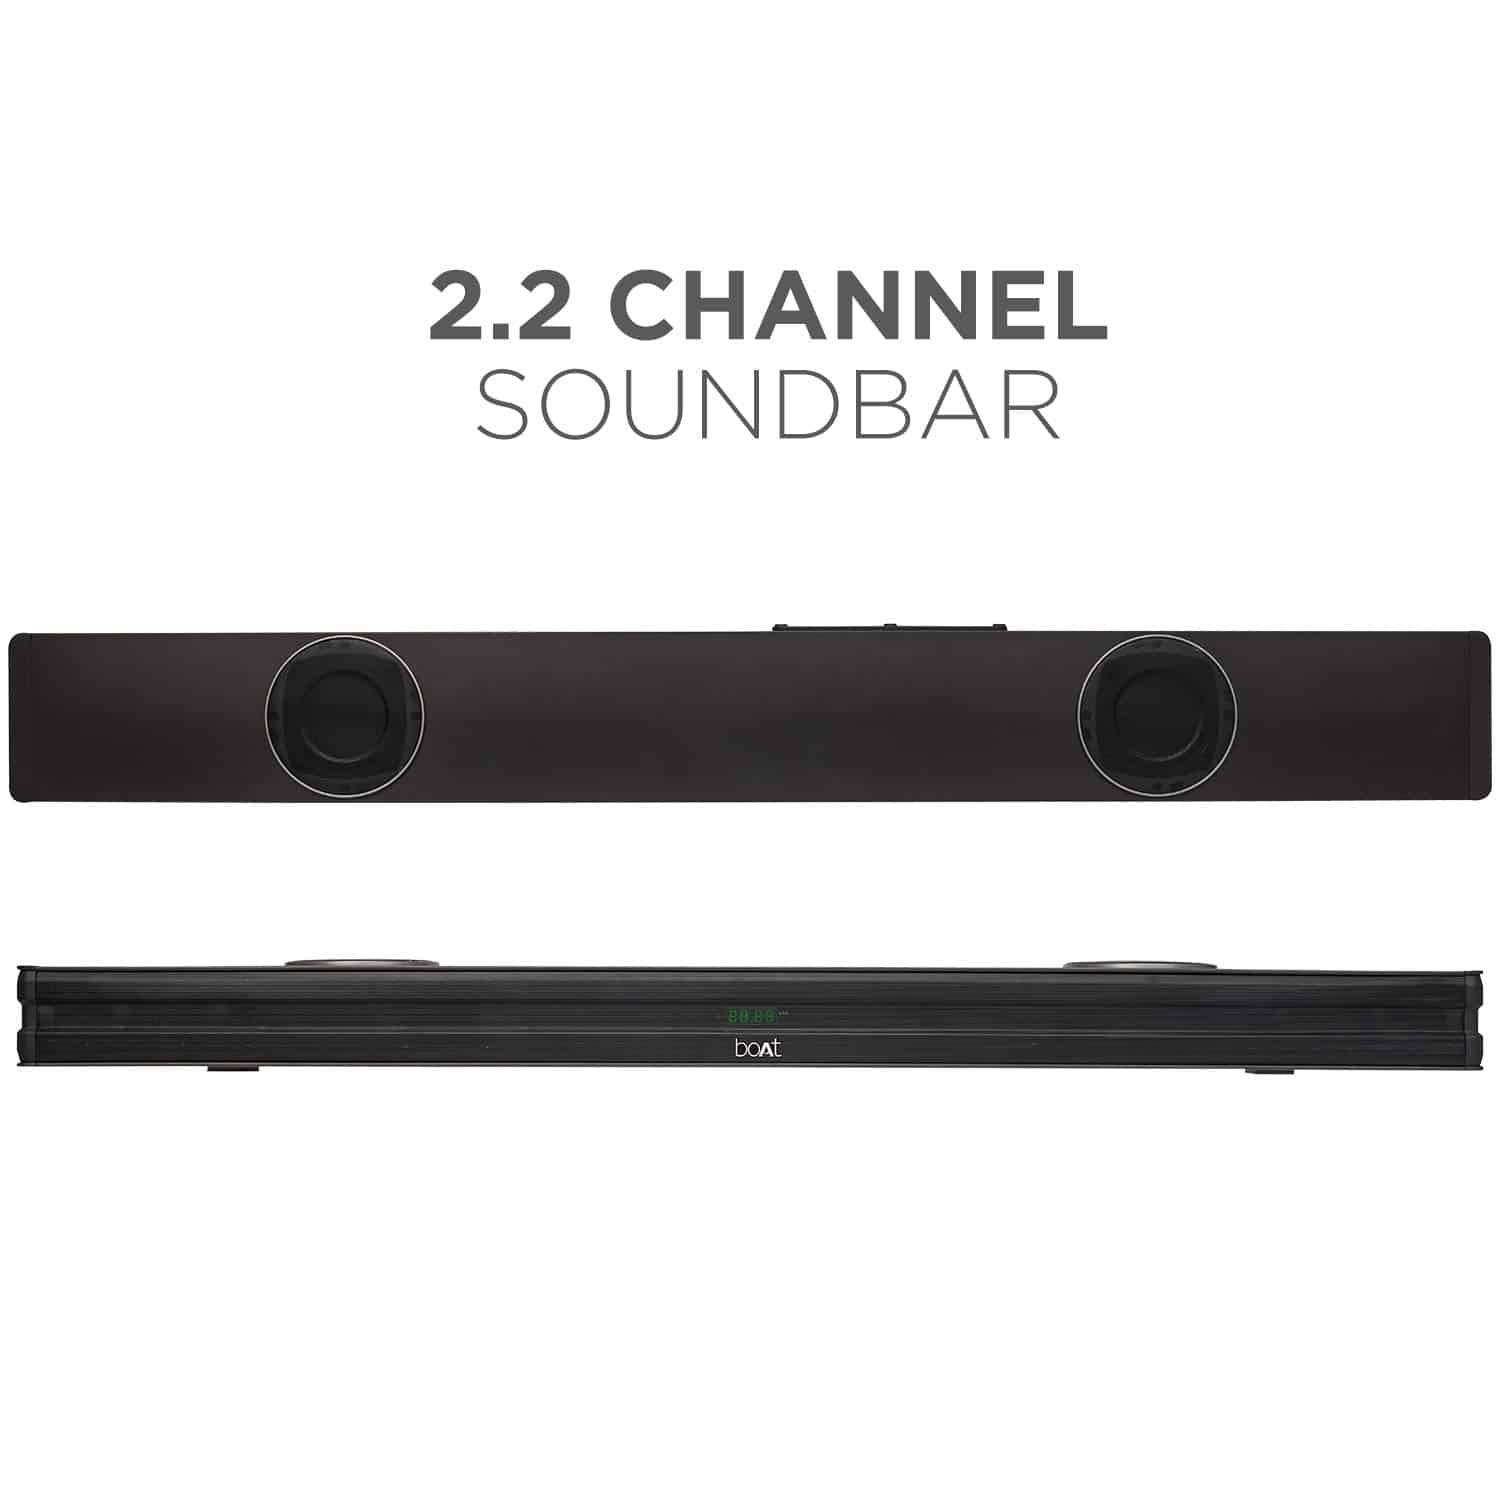 61gAbc7sPPL. SL1500 boAt AAVANTE Bar 1190 Bluetooth Soundbar with 90W output is now available at ₹ 4,499